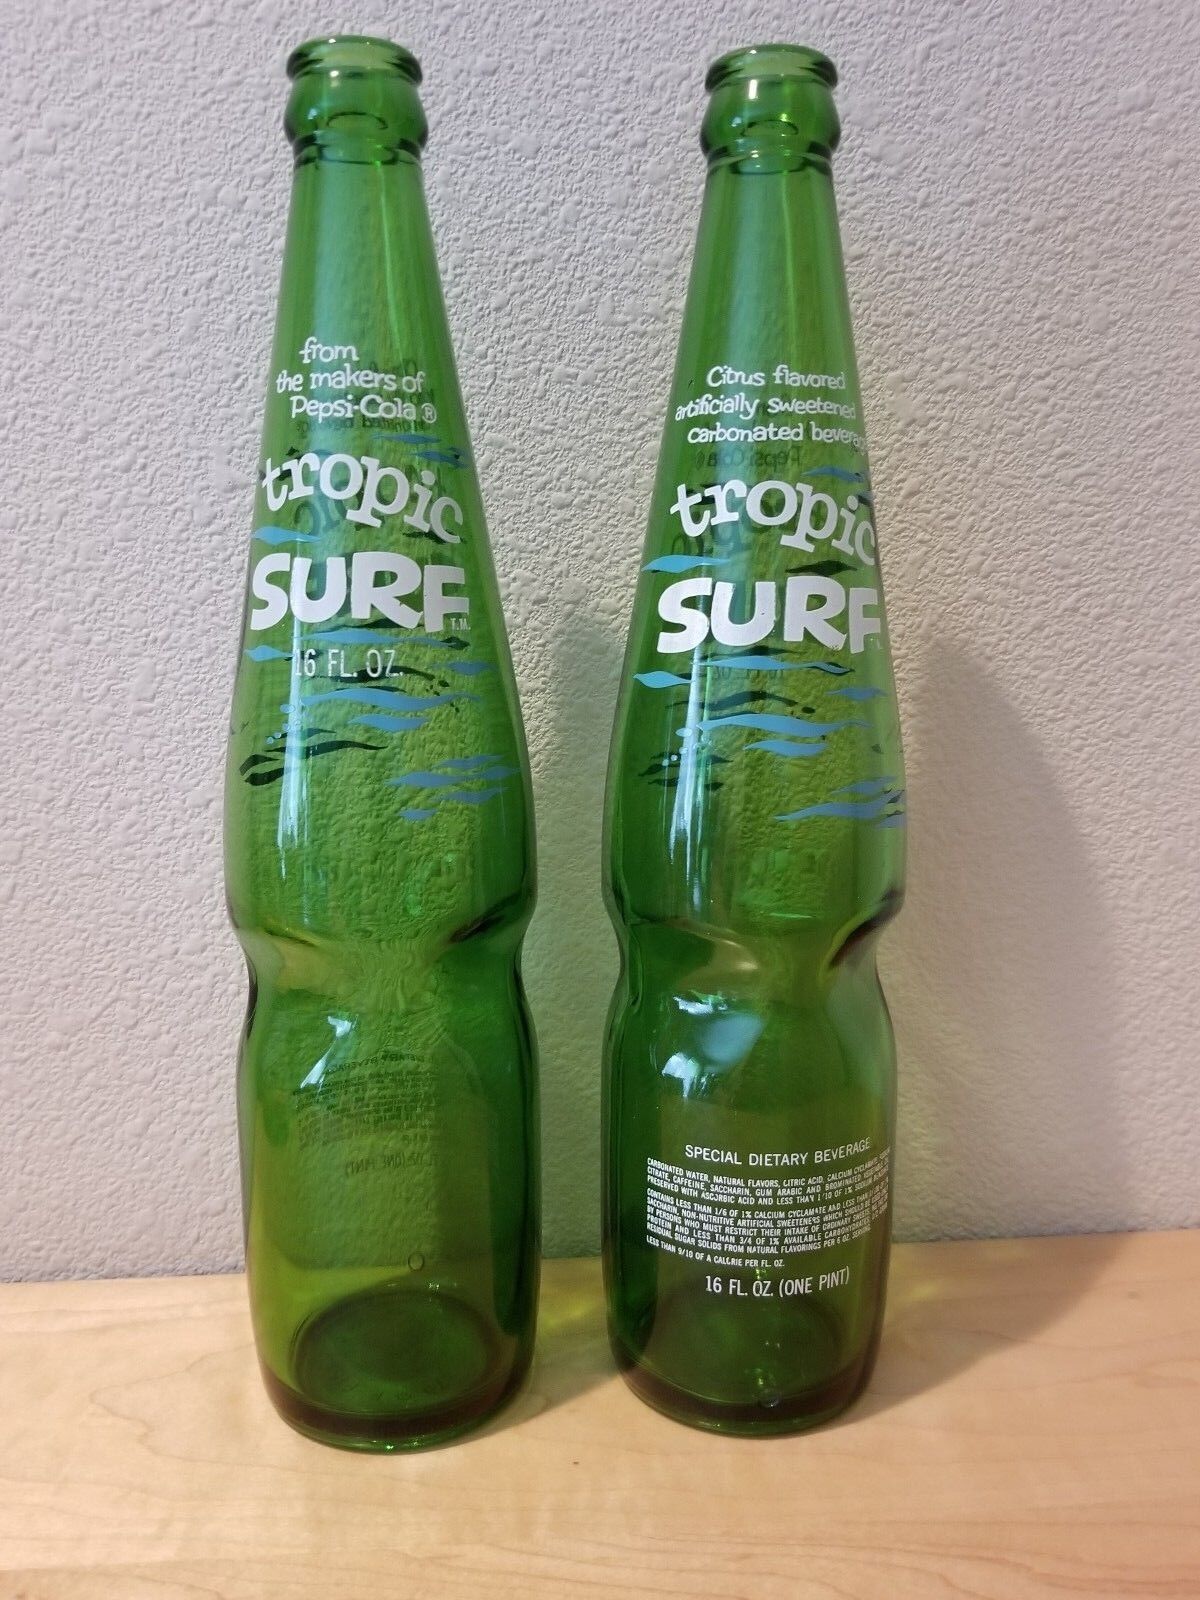 Pair of 2 Tropic Surf Glass 16 oz Bottle Soda Pop Pepsi-Cola VINTAGE 1967 Green